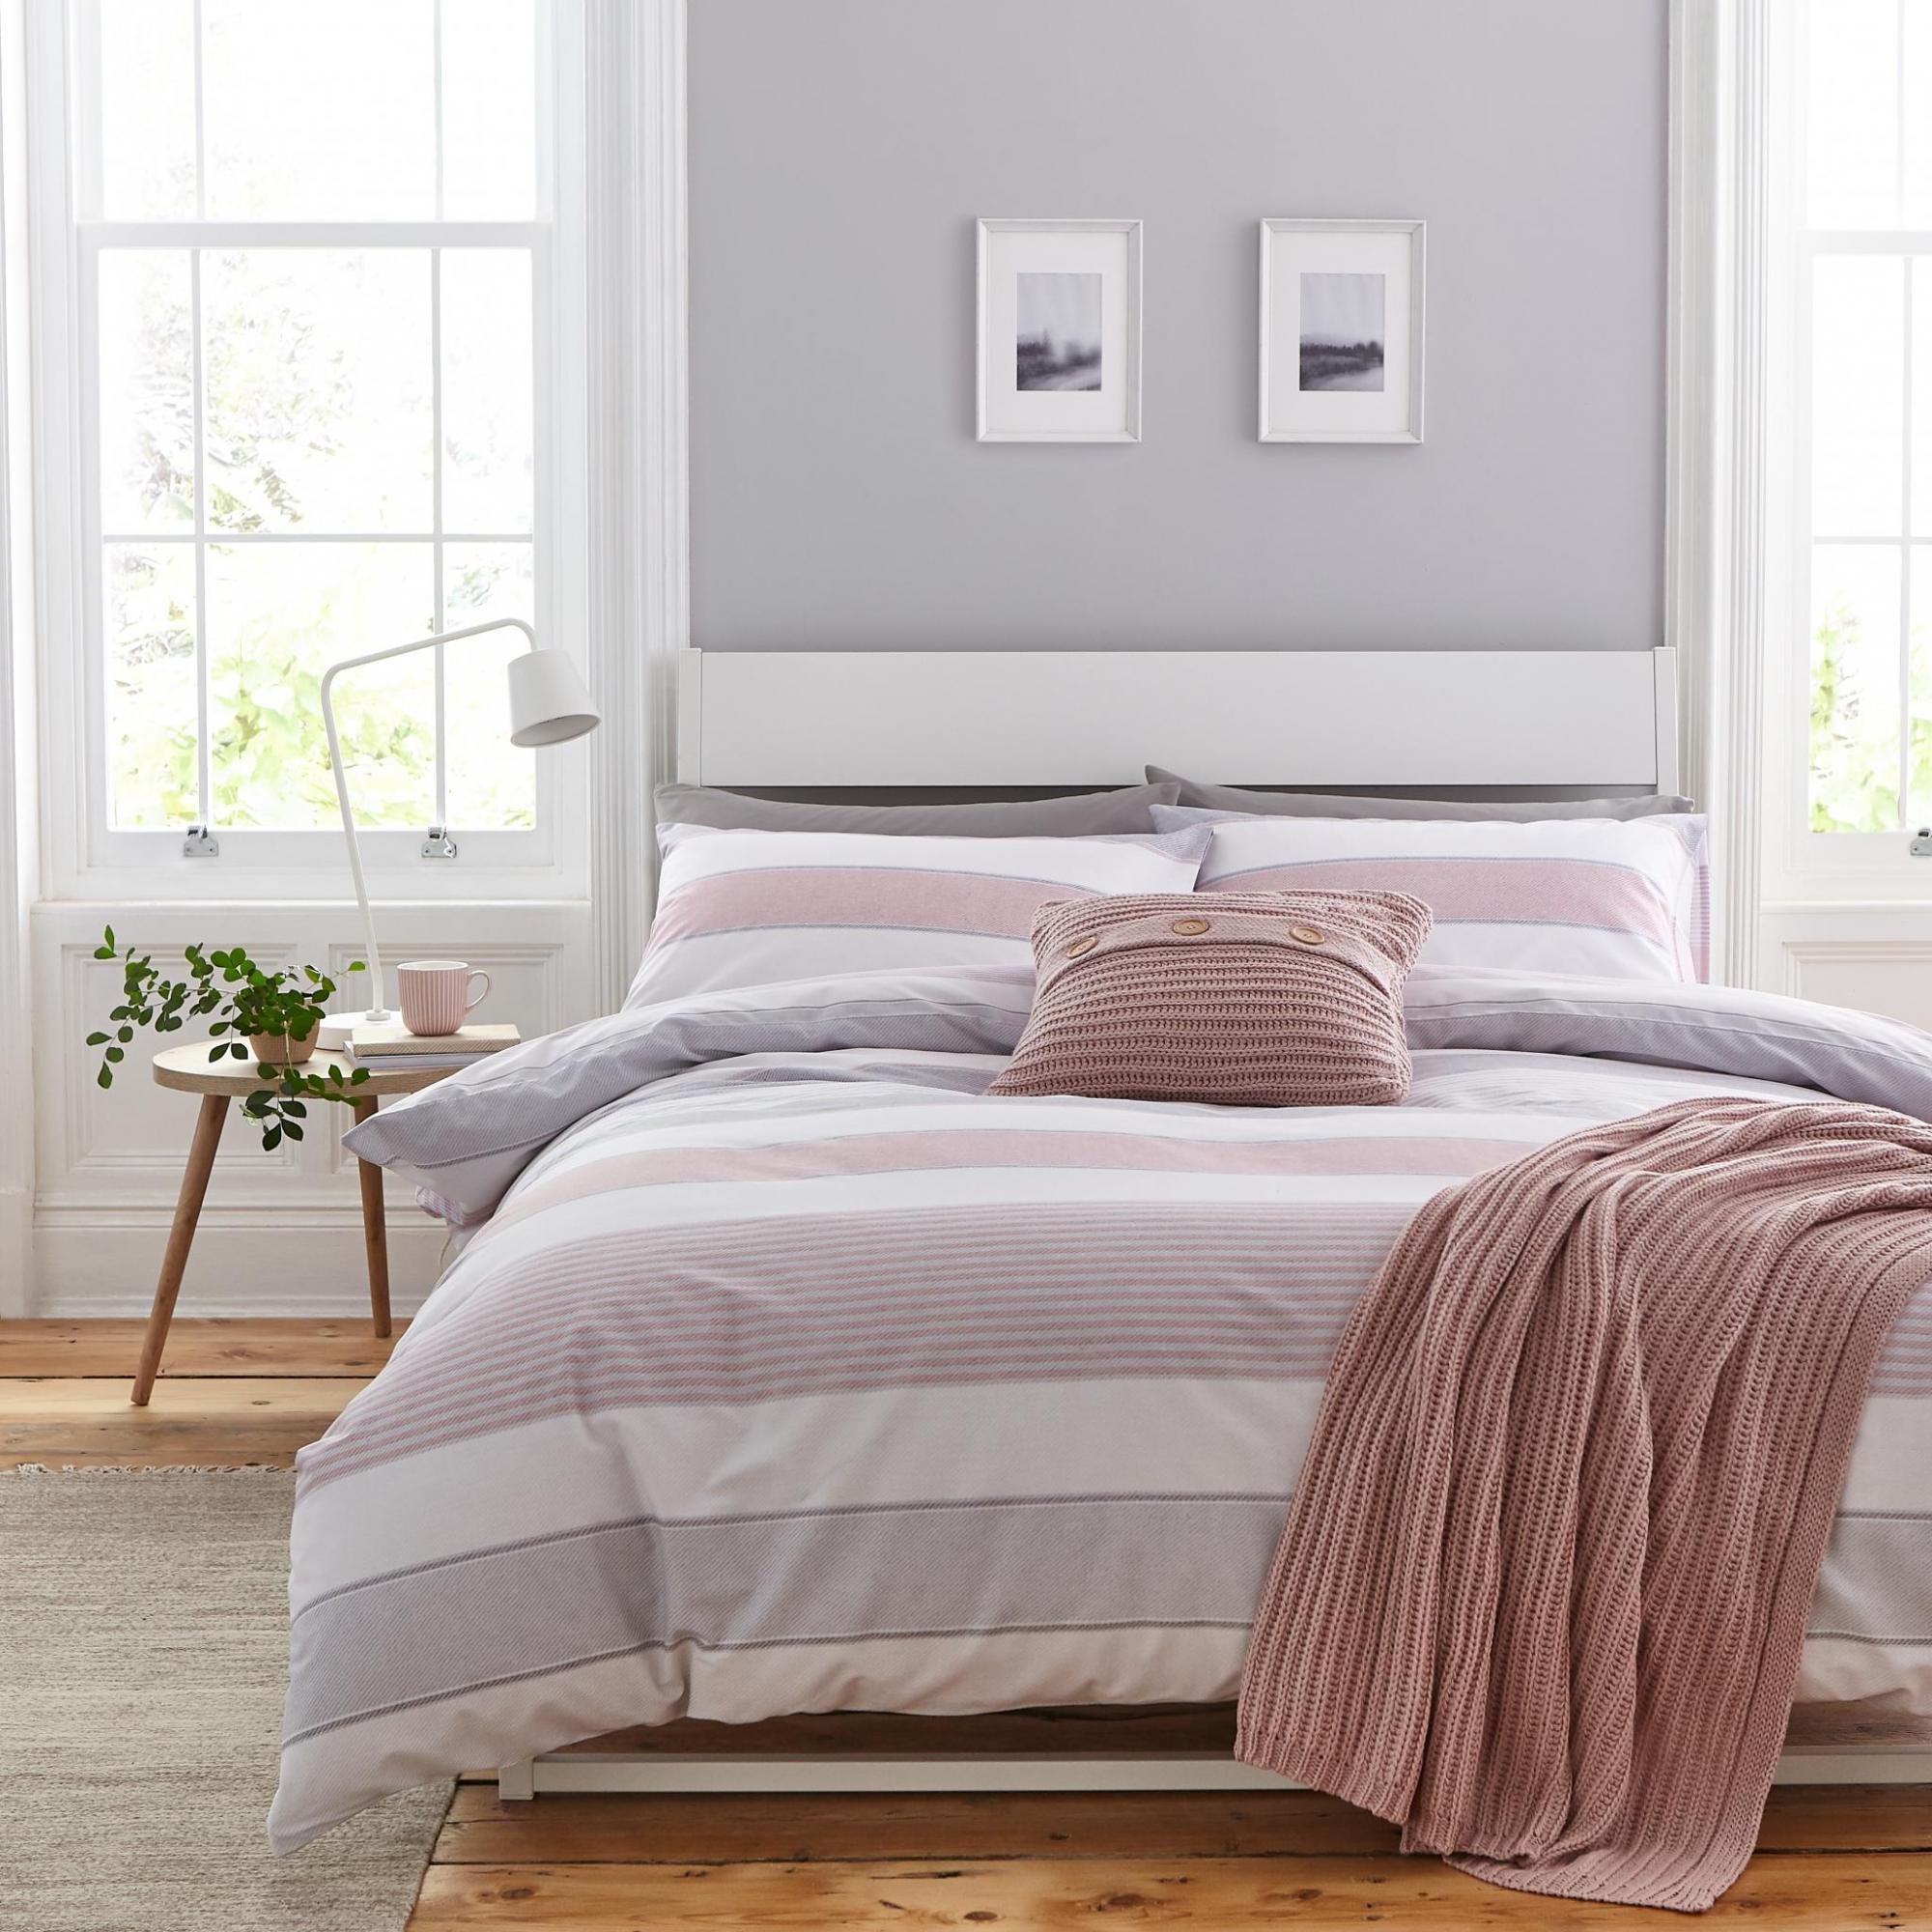 Newquay Pink Stripe Catherine Lansfield Duvet Set Bed Linen York